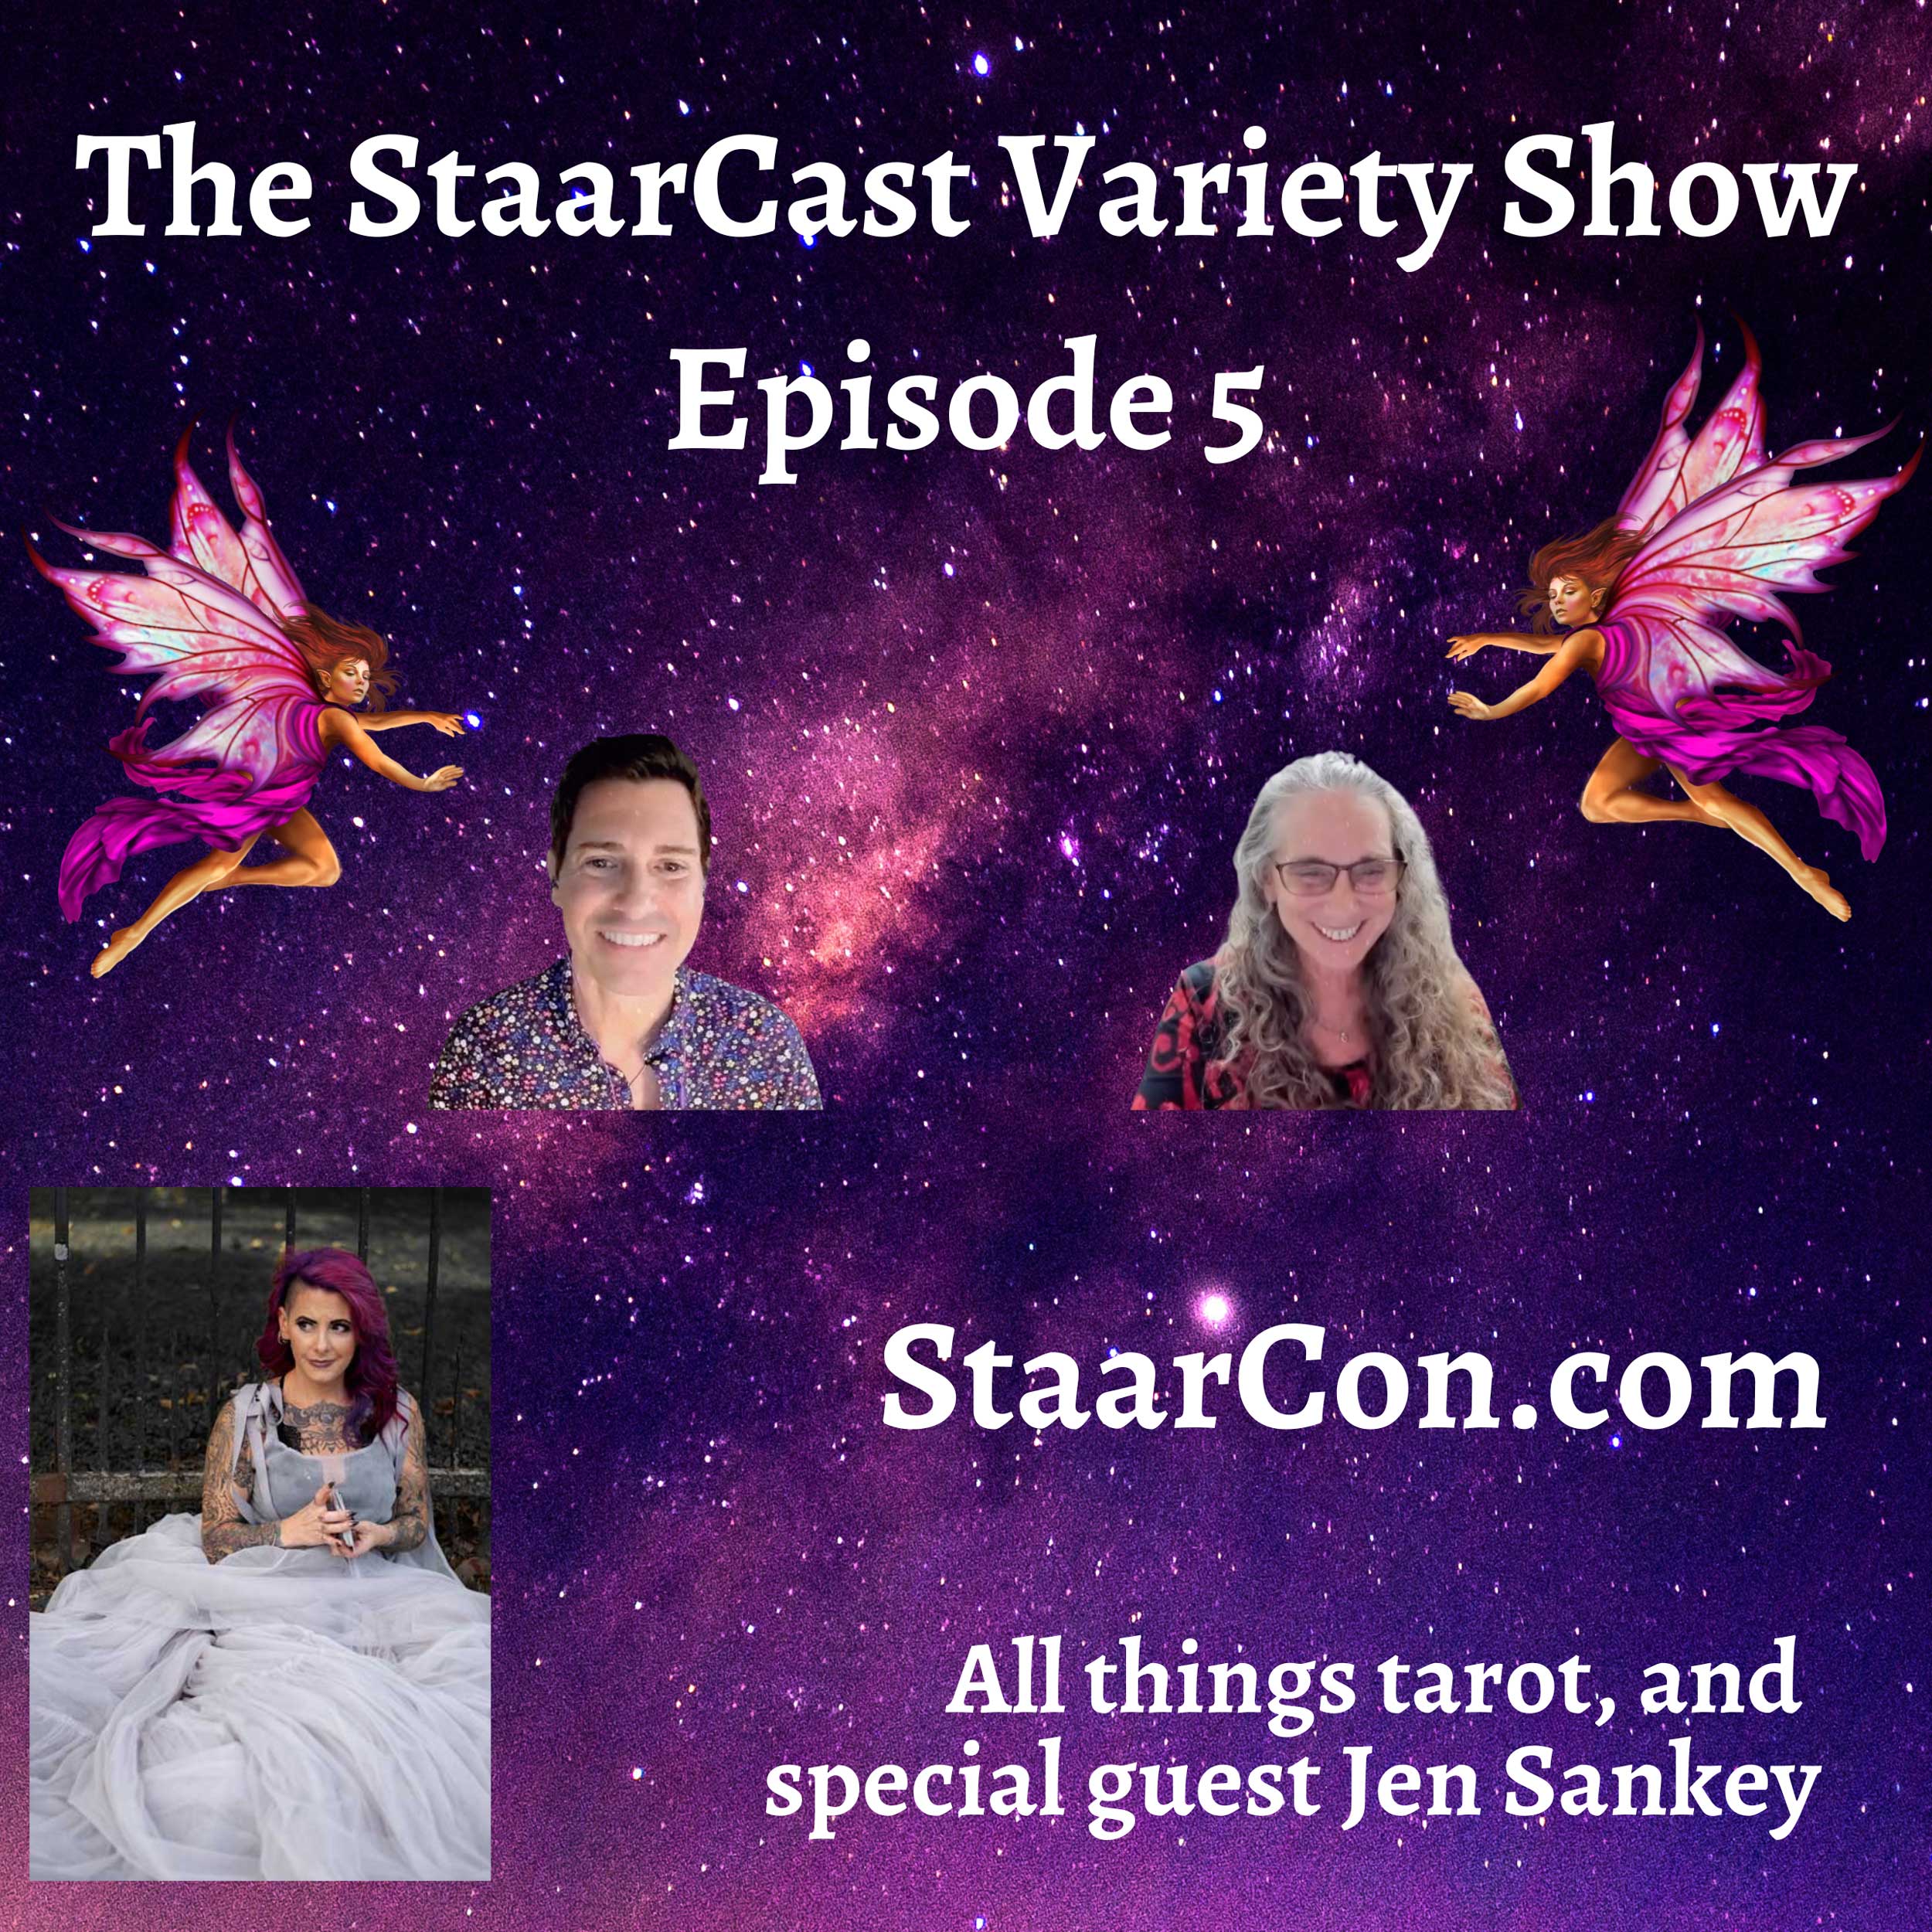 StaarCast Variety Show Episode 5 banner.